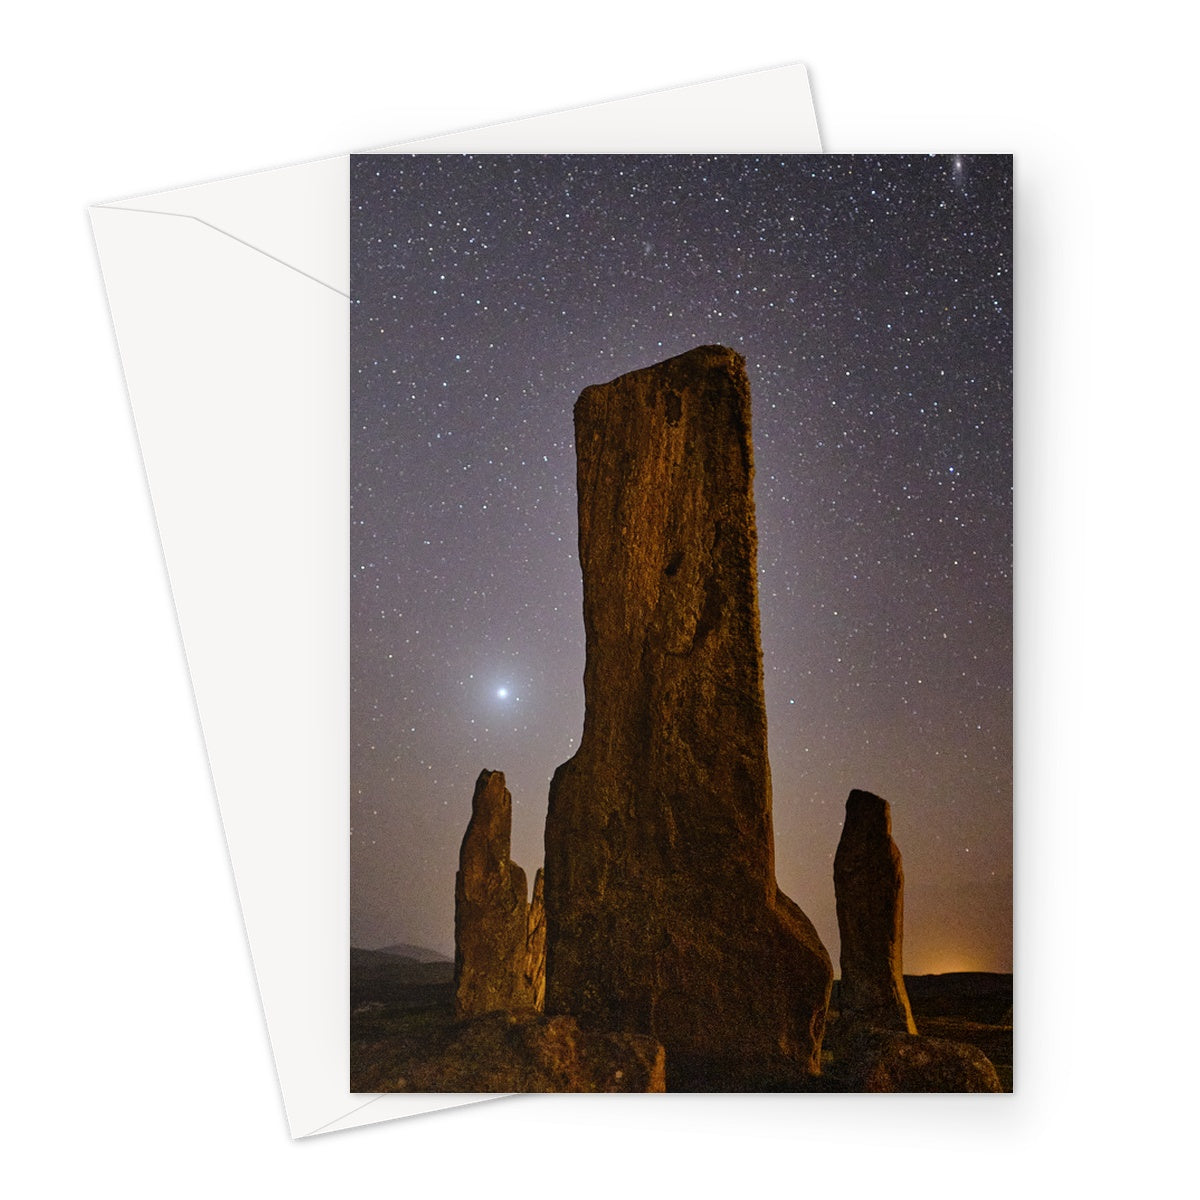 Callanish Standing Stones and Venus Greeting Card